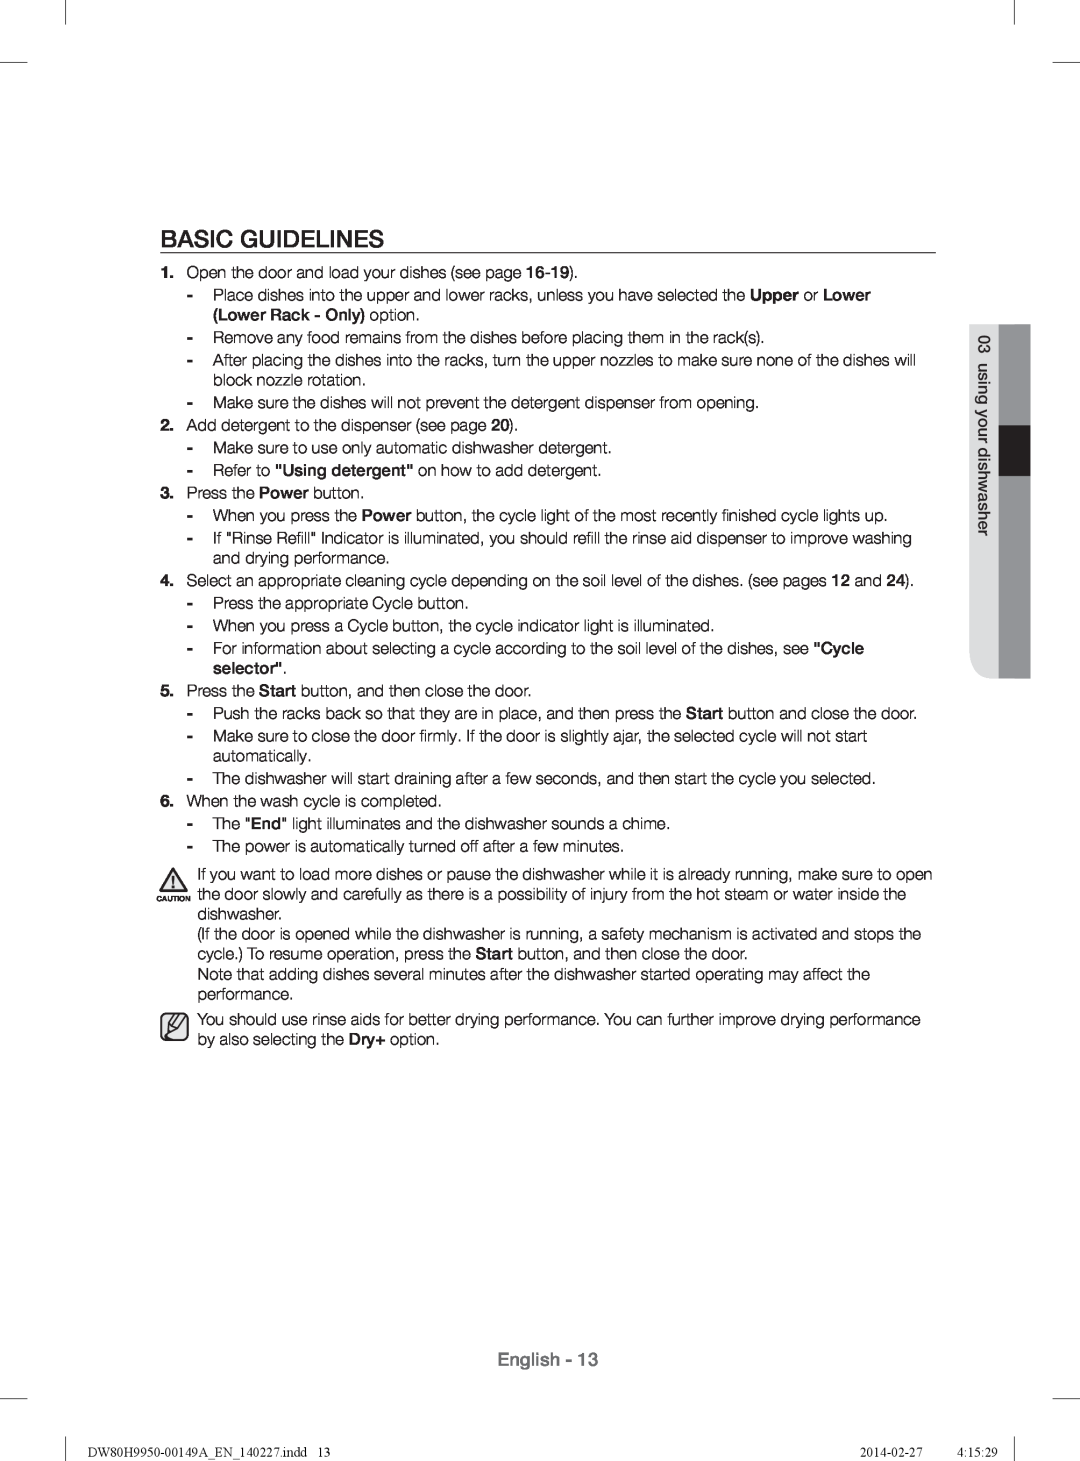 Samsung DW80H9930US user manual Basic Guidelines, English 